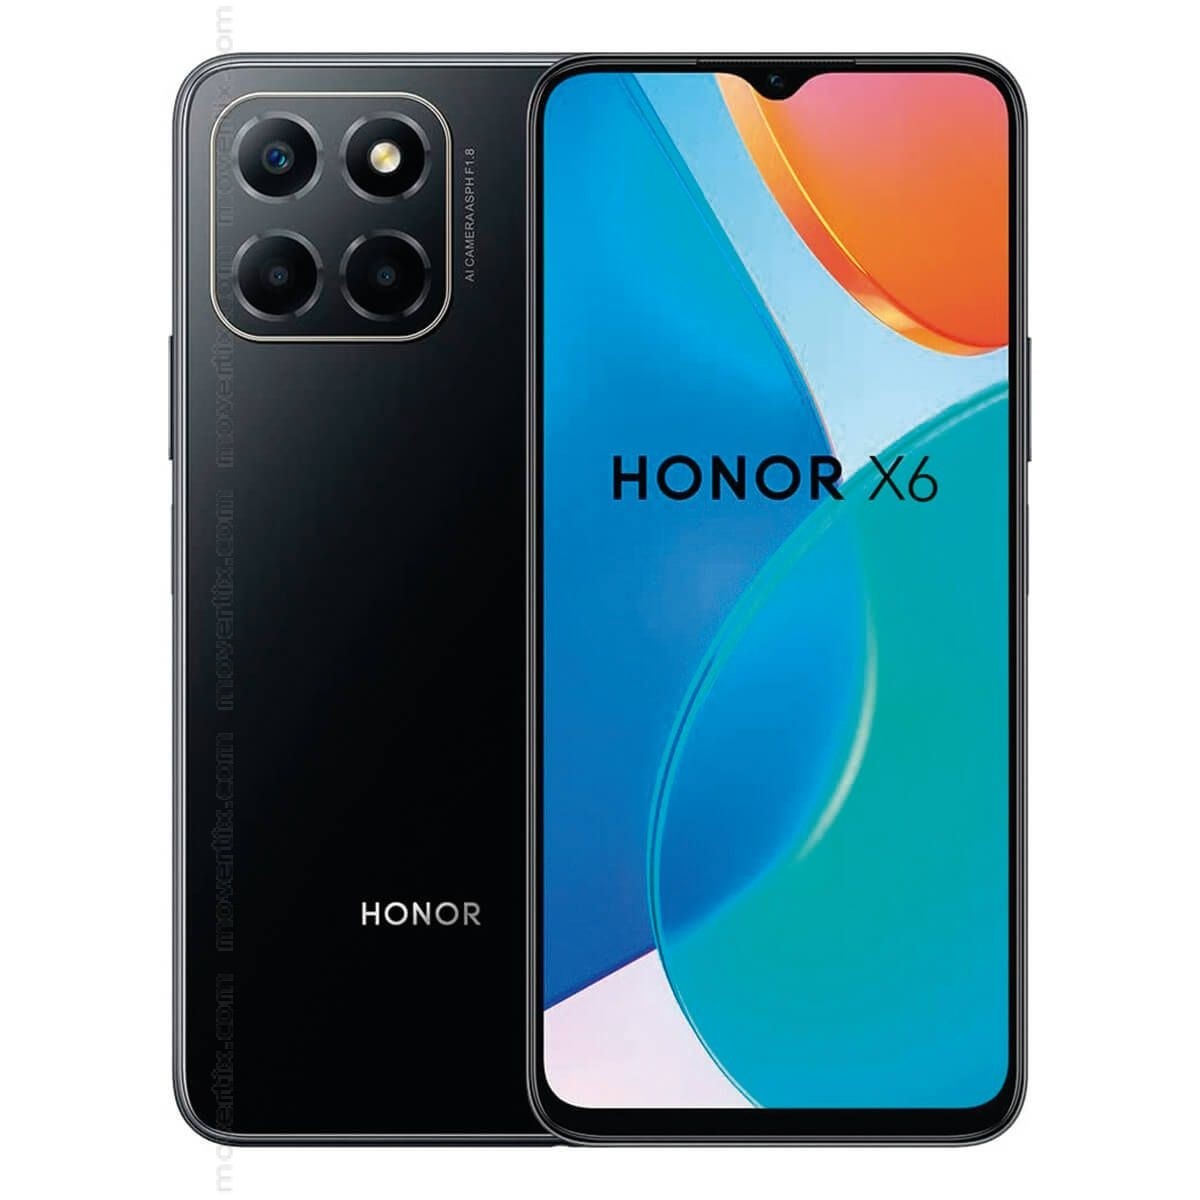 Honor X6 (4Gb+64Gb) Smartphone with FREE Lenovo HE05